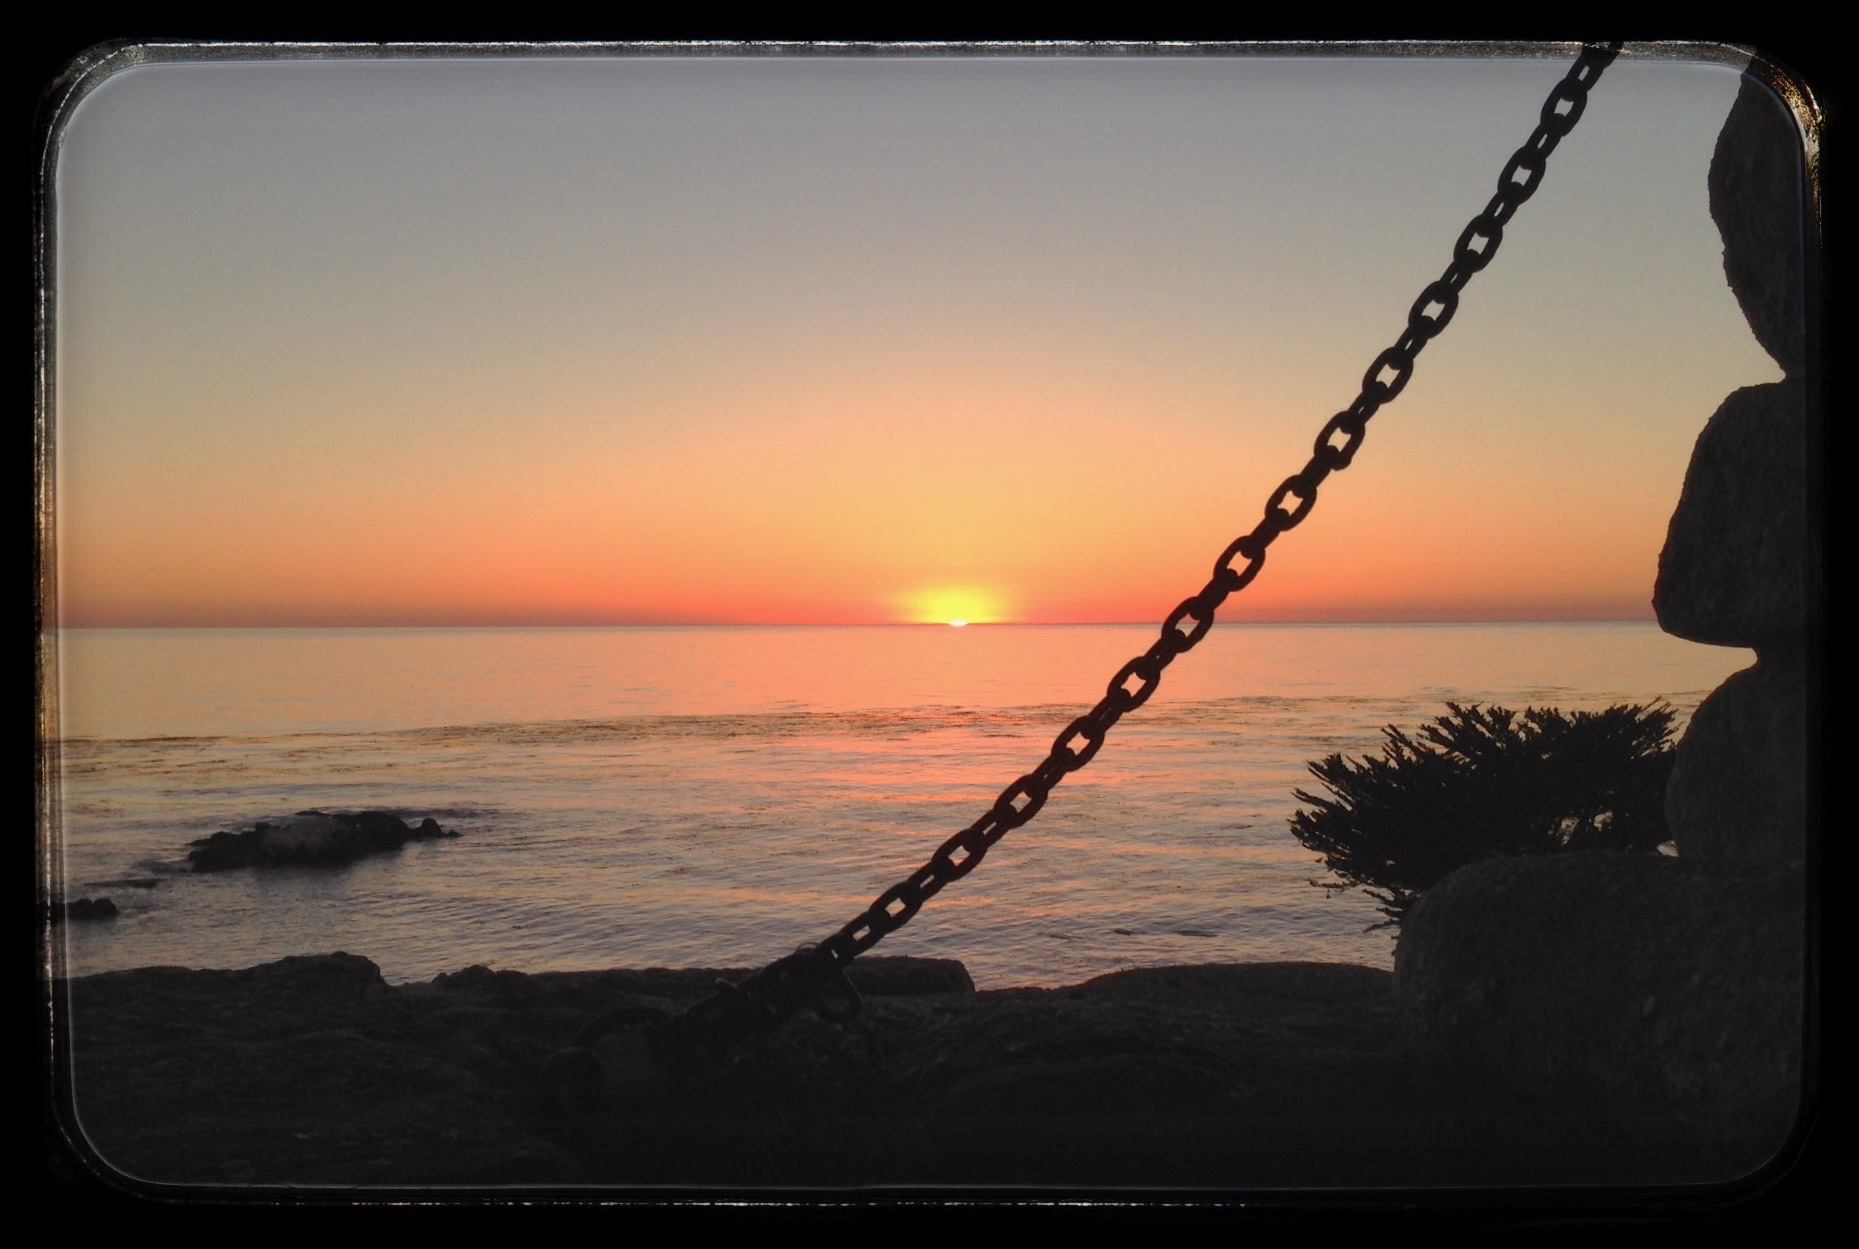 hawk tower chain sunset view.jpg